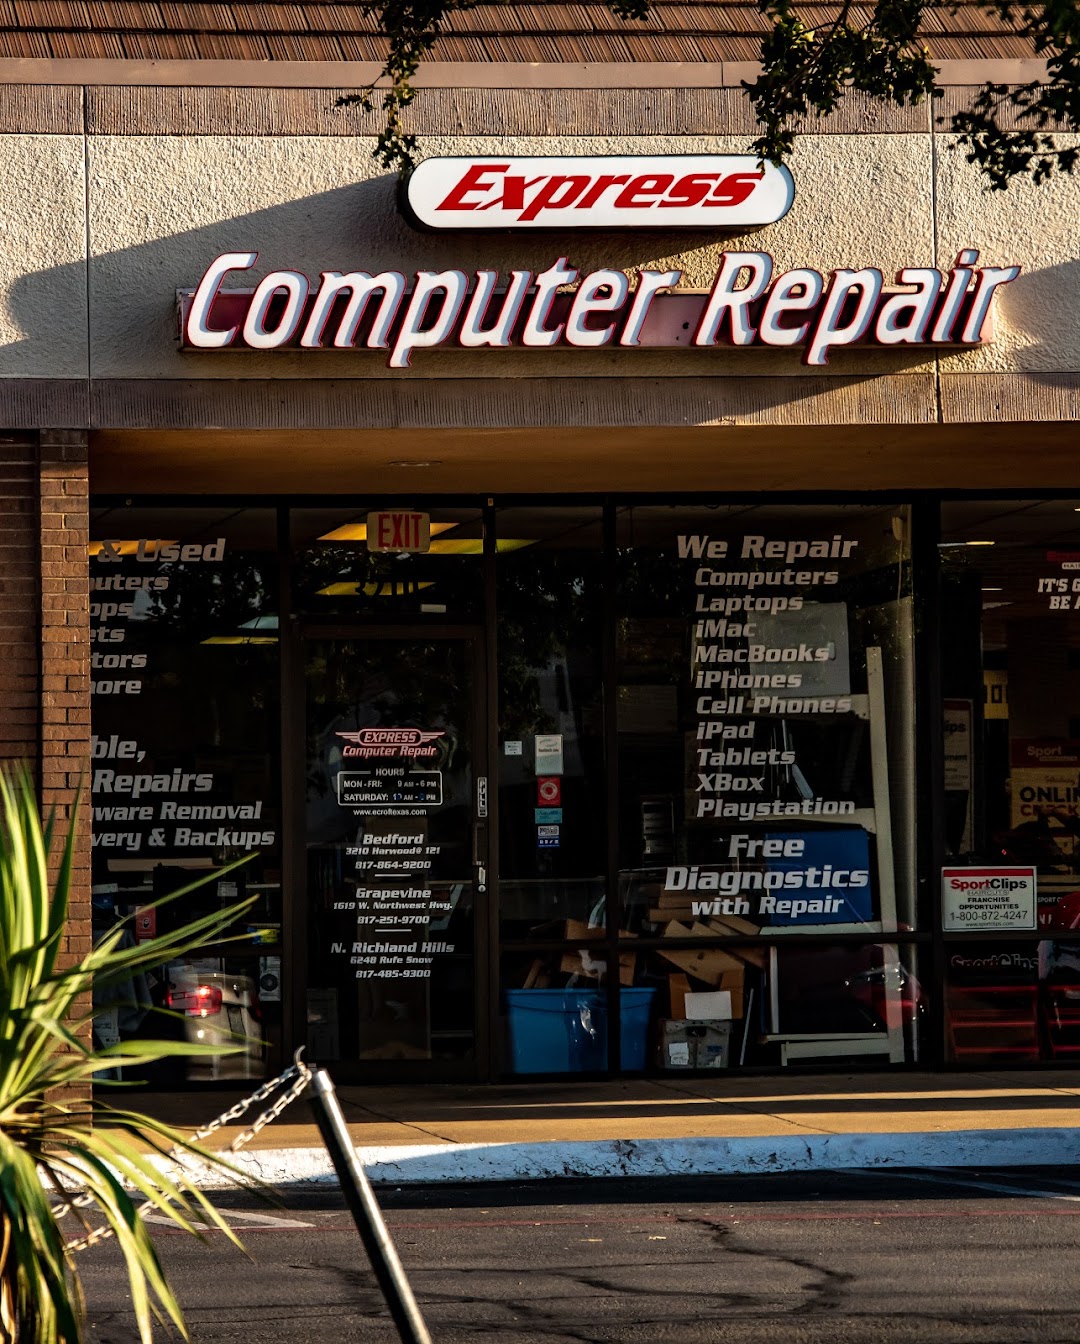 Express Computer Repair